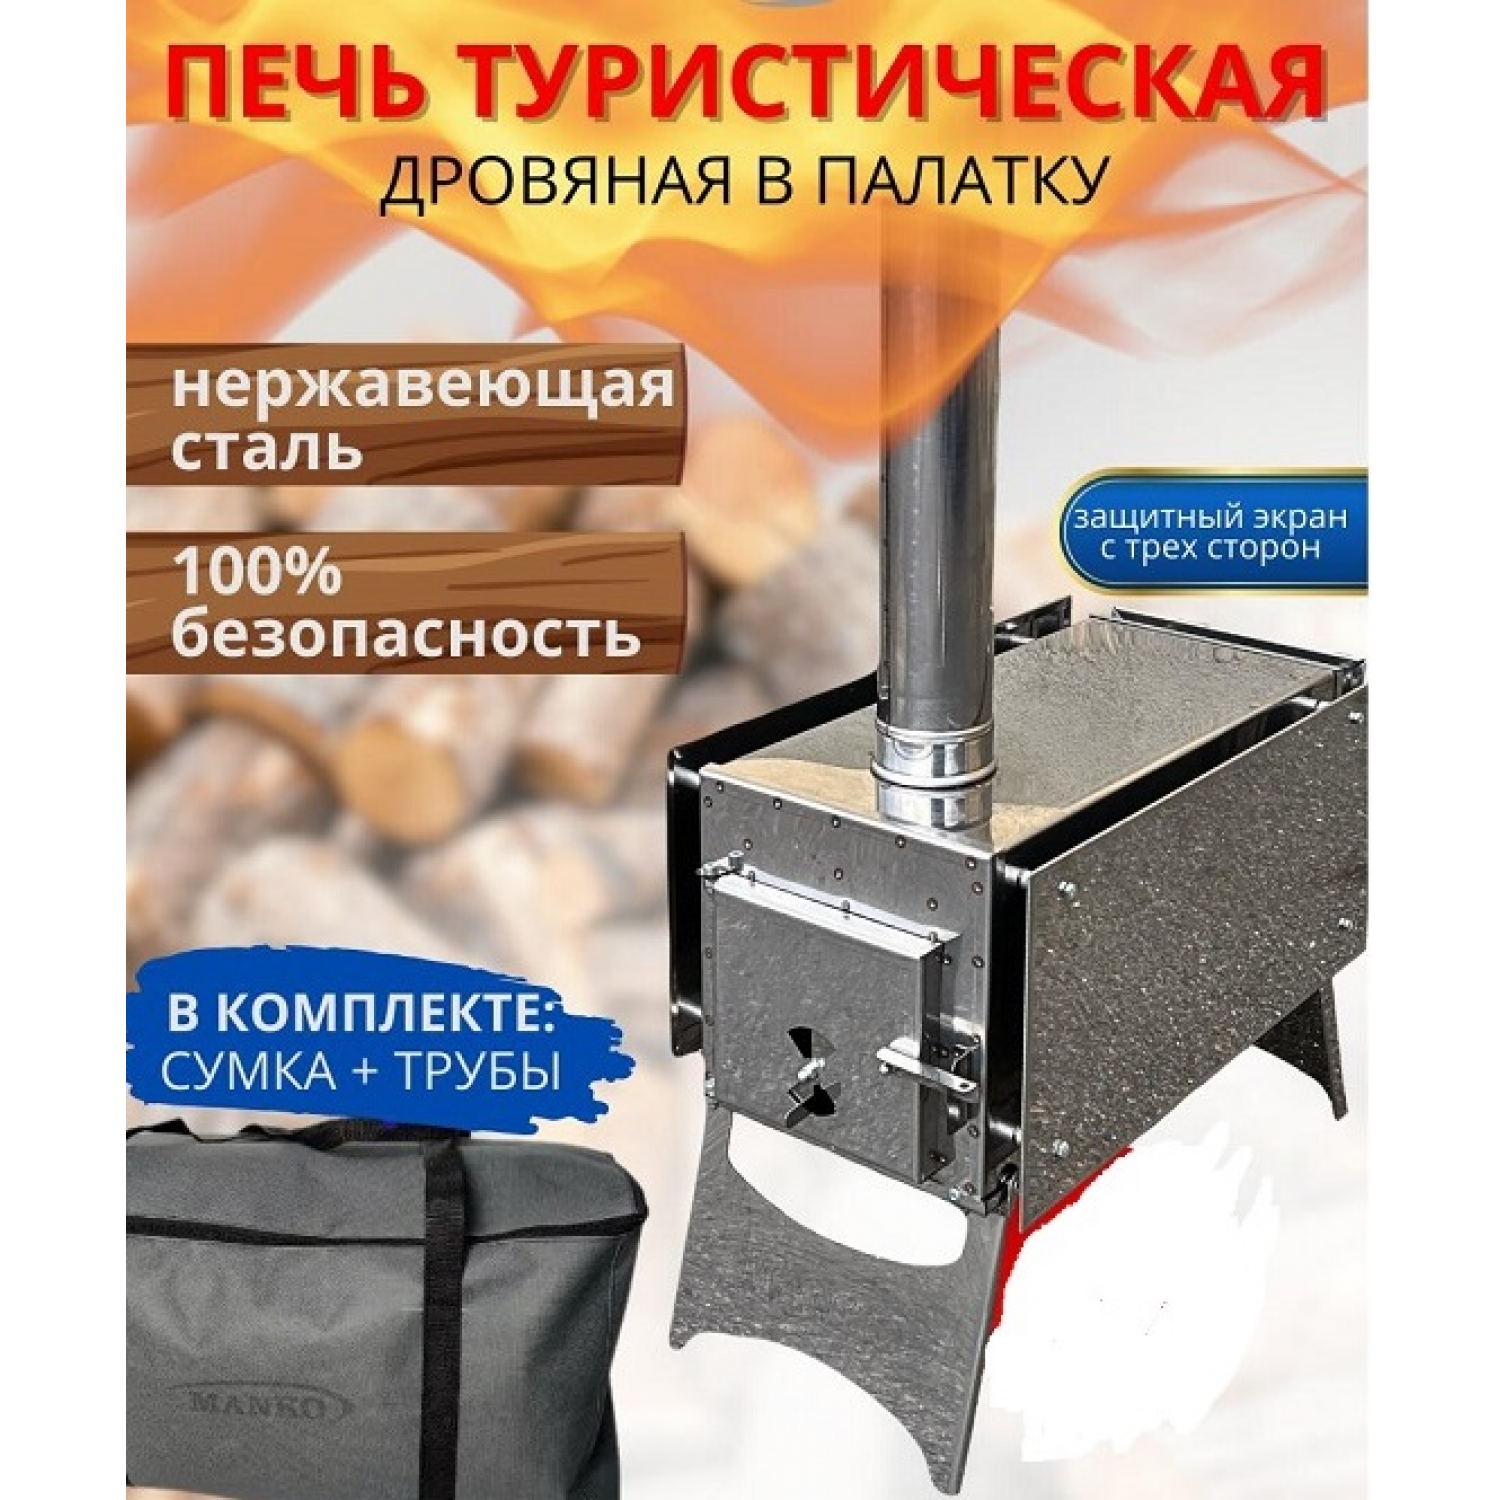 Покупка Печь на дровах MANKO с трубами Б в Минске Беларуси